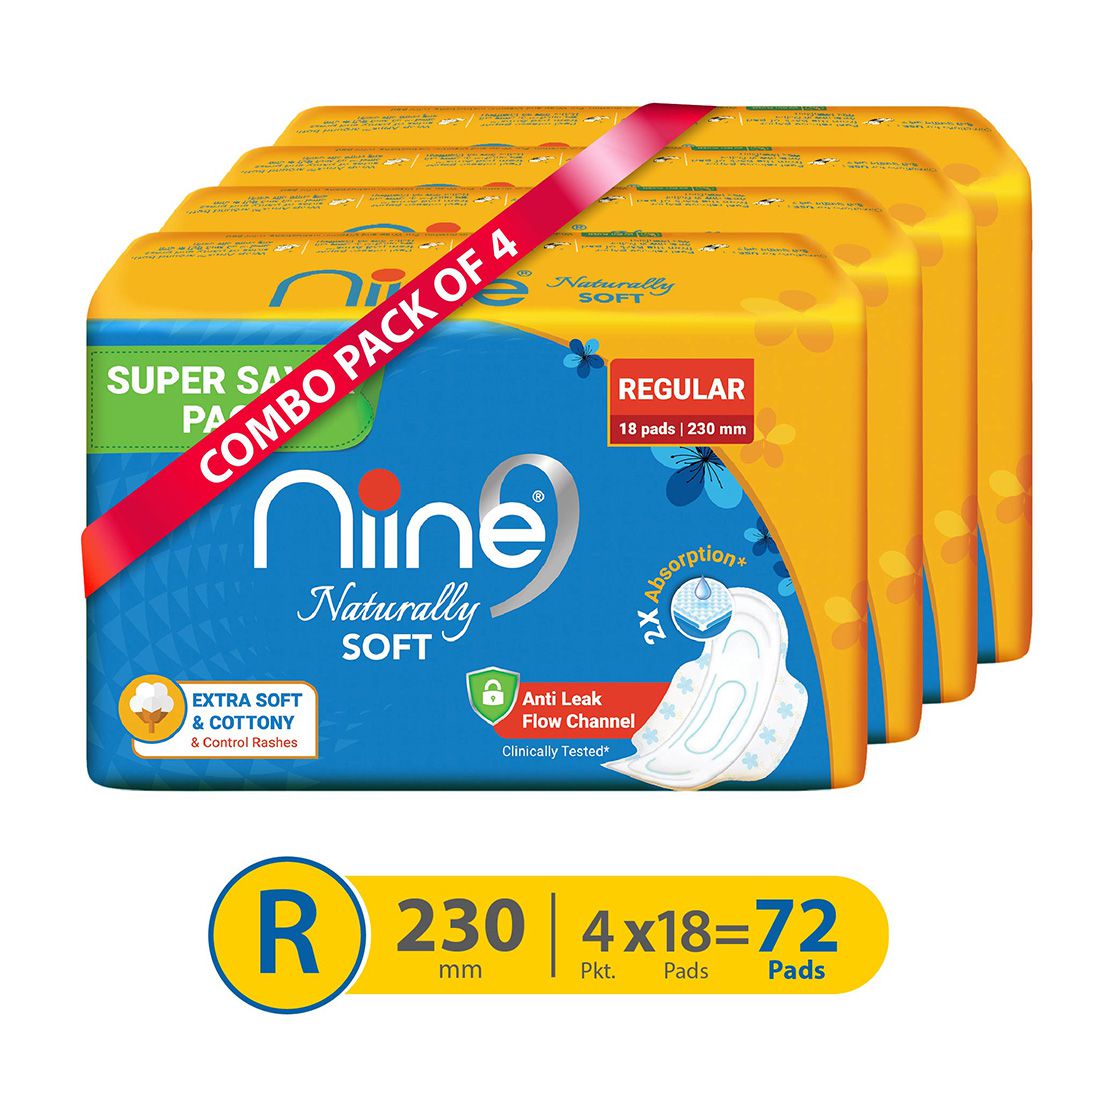     			Niine Naturally Soft Regular SUPER SAVER PACK Sanitary Napkins for women (Pack of 4) 72 Pads